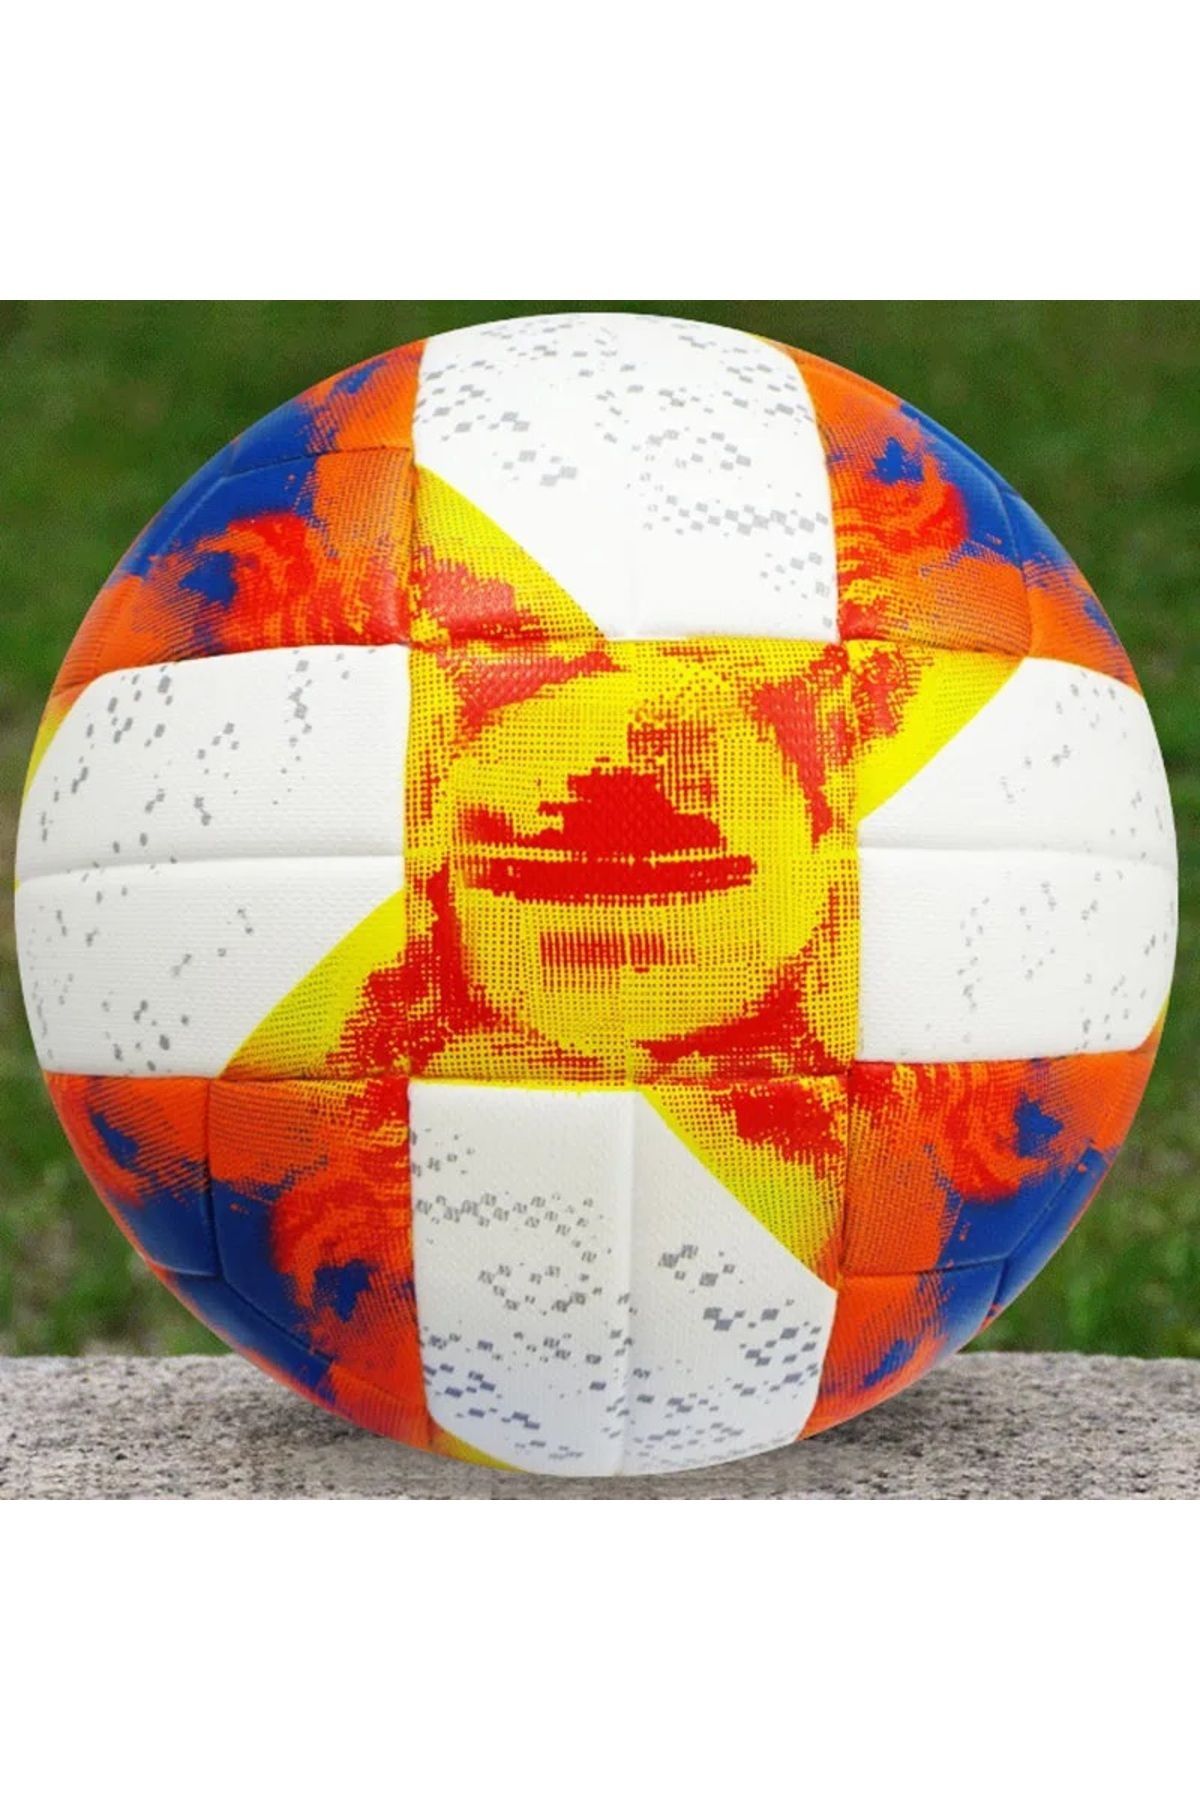 Janva Lazer Kesim Futbol Topu 420 gram Maç ve Antreman Topu Tiricolore Tasarımı